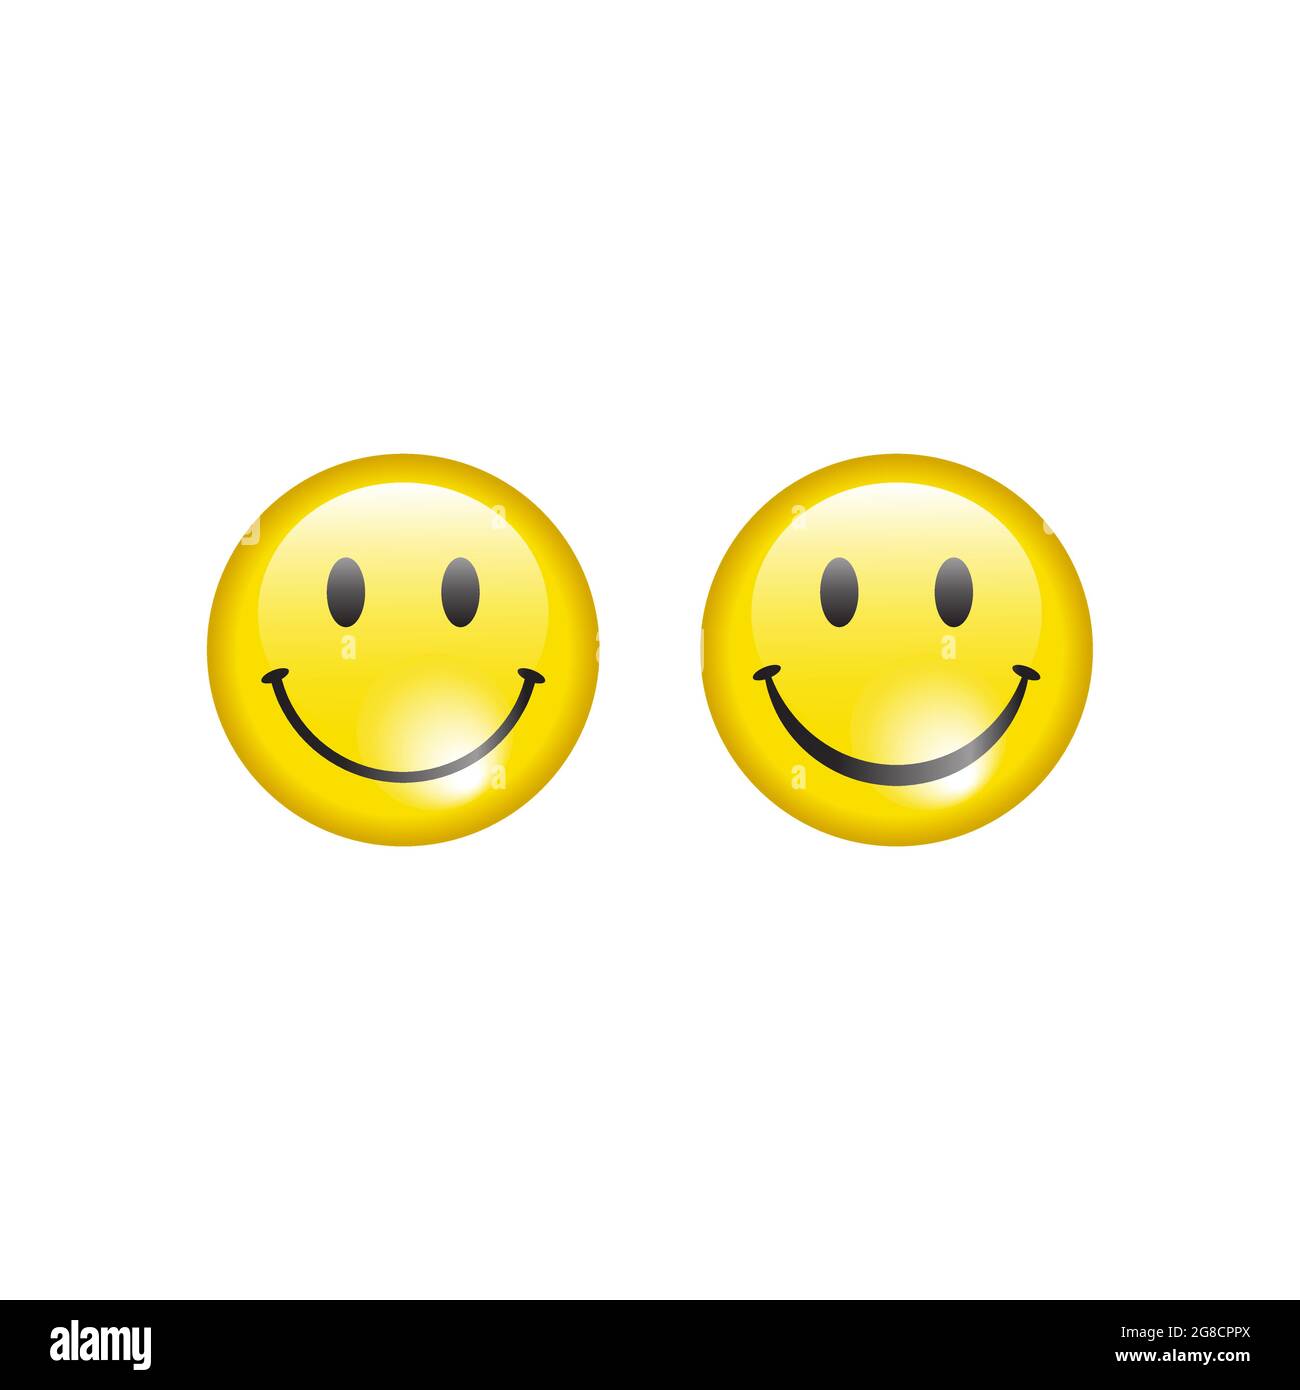 Three eye happy face emoticon Stock Photo - Alamy